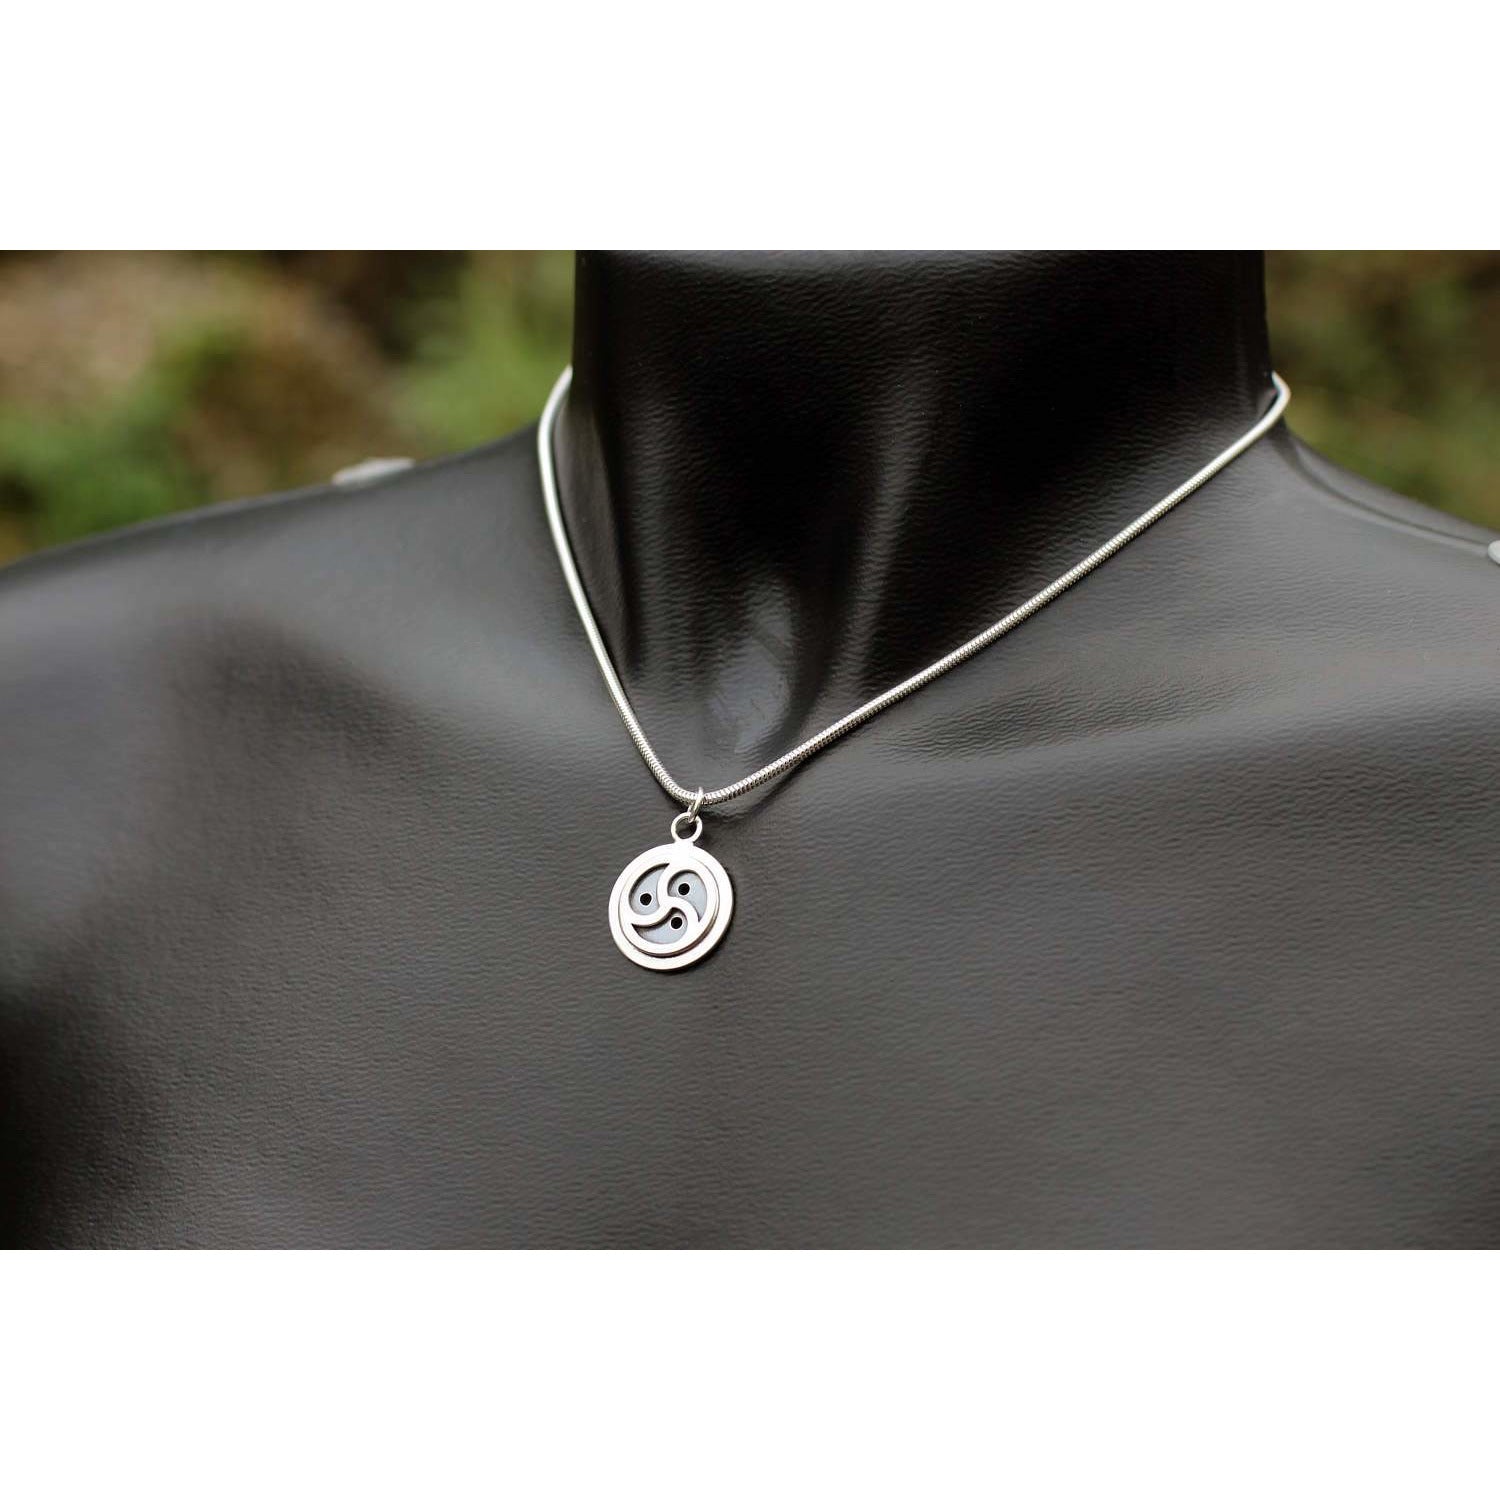 Sterling Silver Triskele BDSM Symbol, Pendant Bondage Jewelry, Emblem.